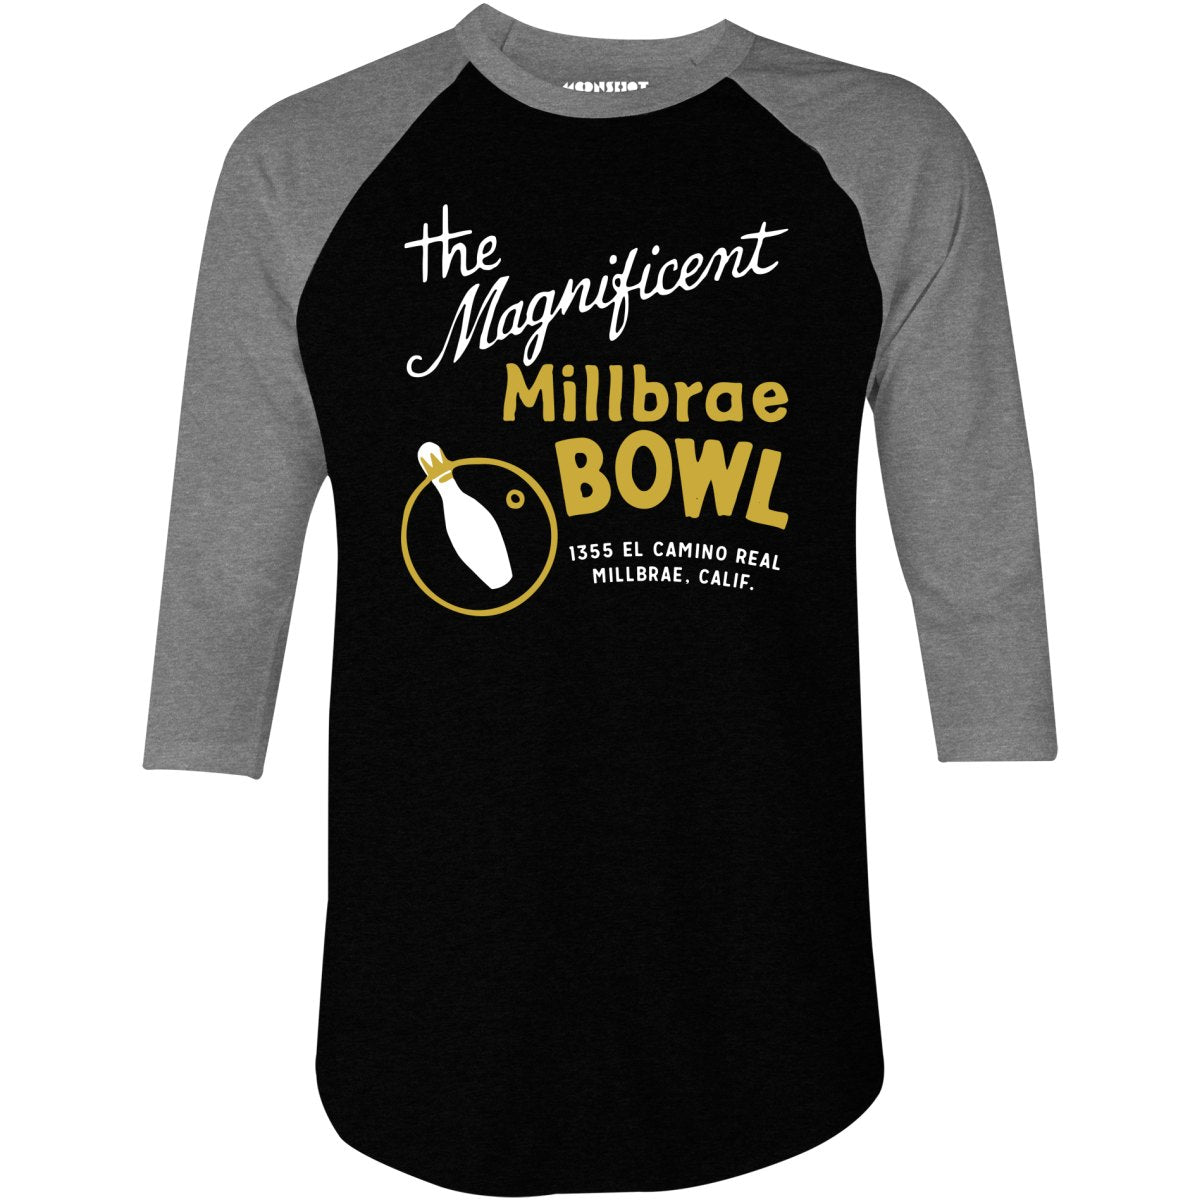 Millbrae Bowl - Millbrae, CA - Vintage Bowling Alley - 3/4 Sleeve Raglan T-Shirt